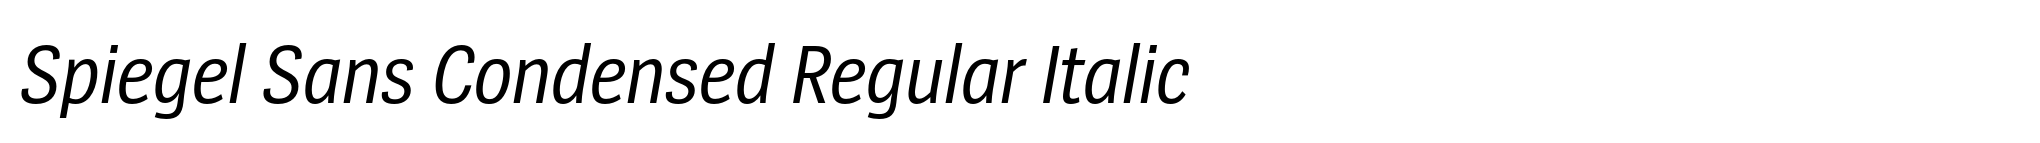 Spiegel Sans Condensed Regular Italic image